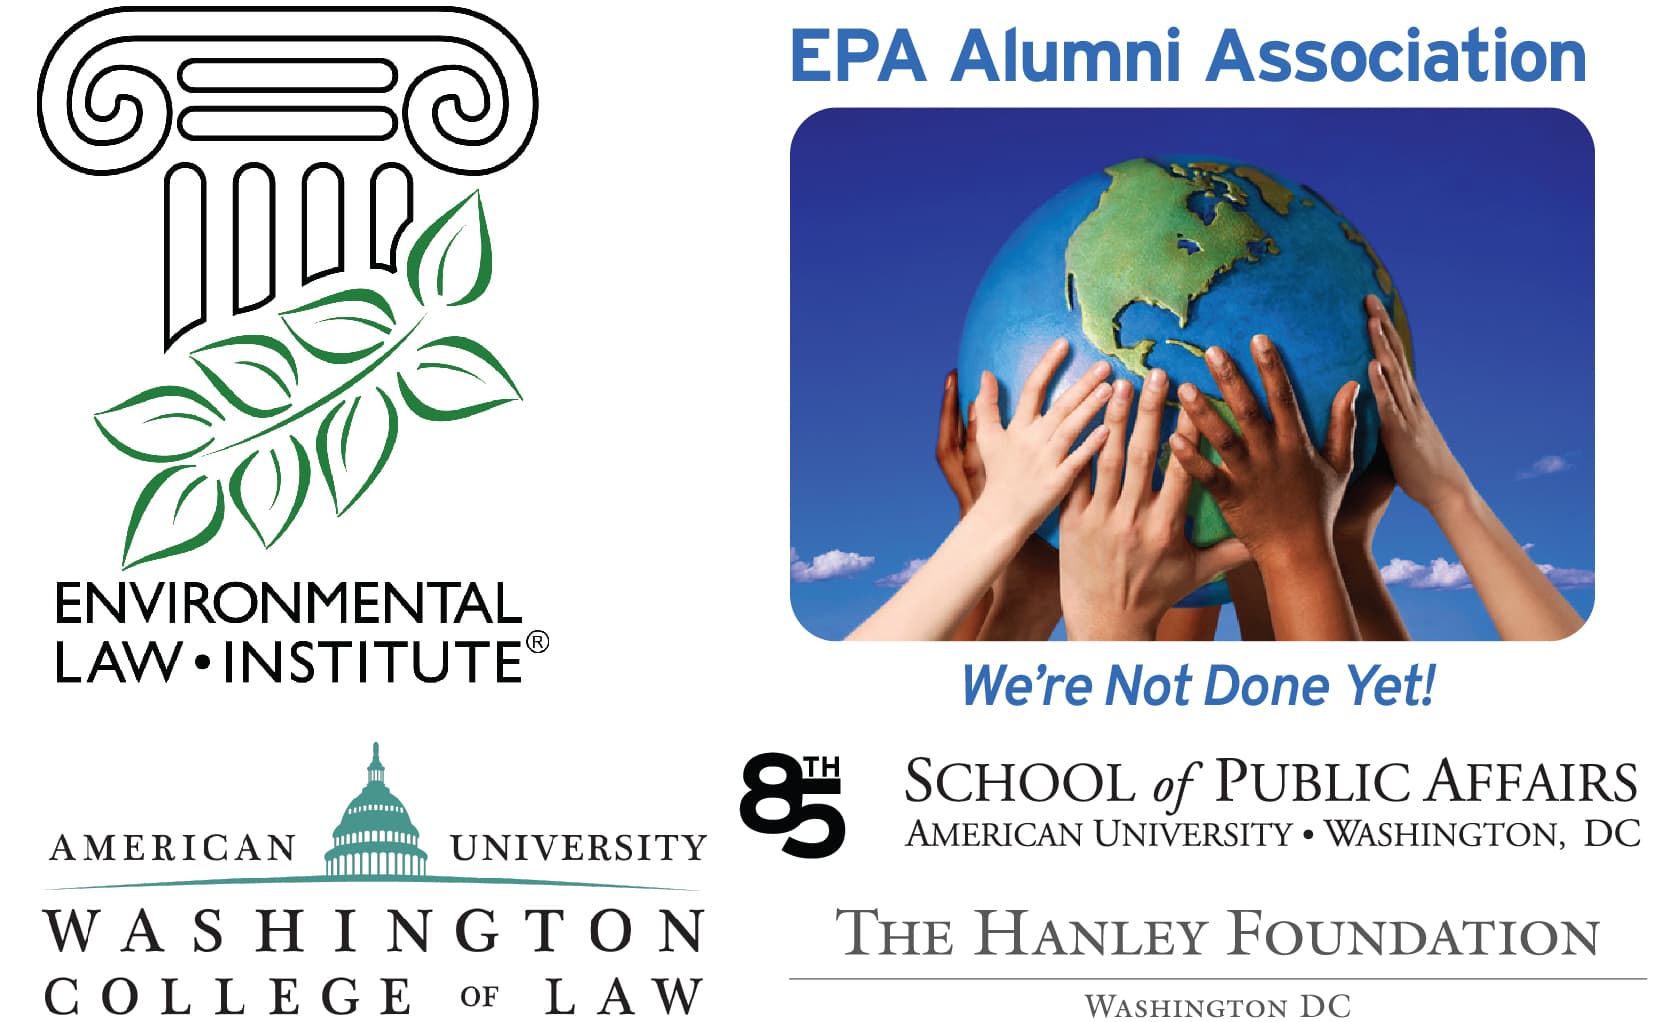 Environmental Law Institute. Washington College of Law. EPA Alumni Association. School of Public Affairs. The Hanley Foundation.